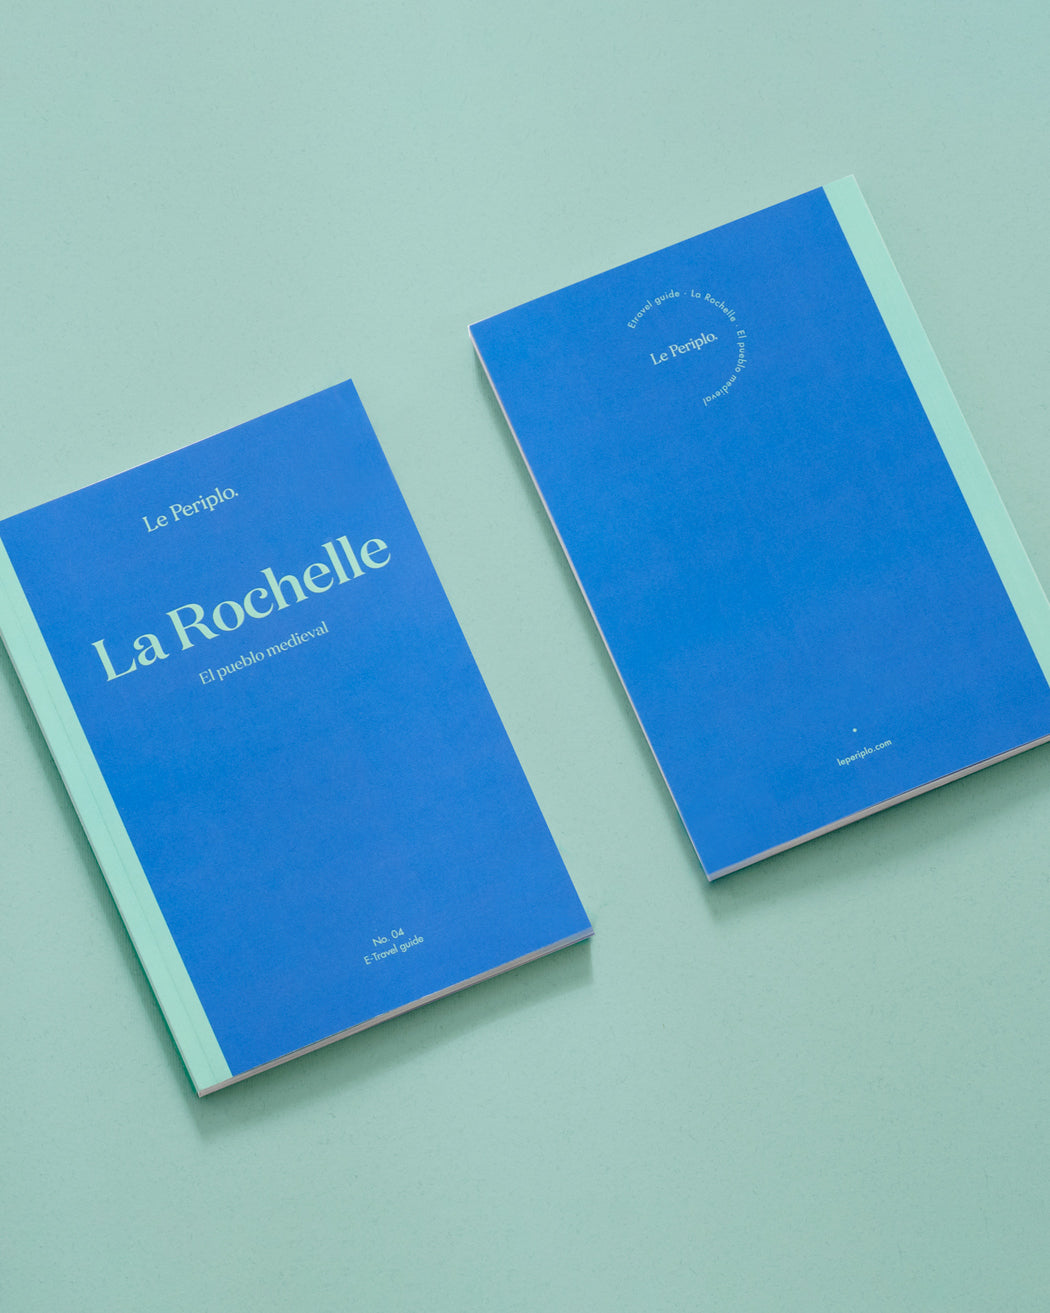 La Rochelle (printed) Spanish version